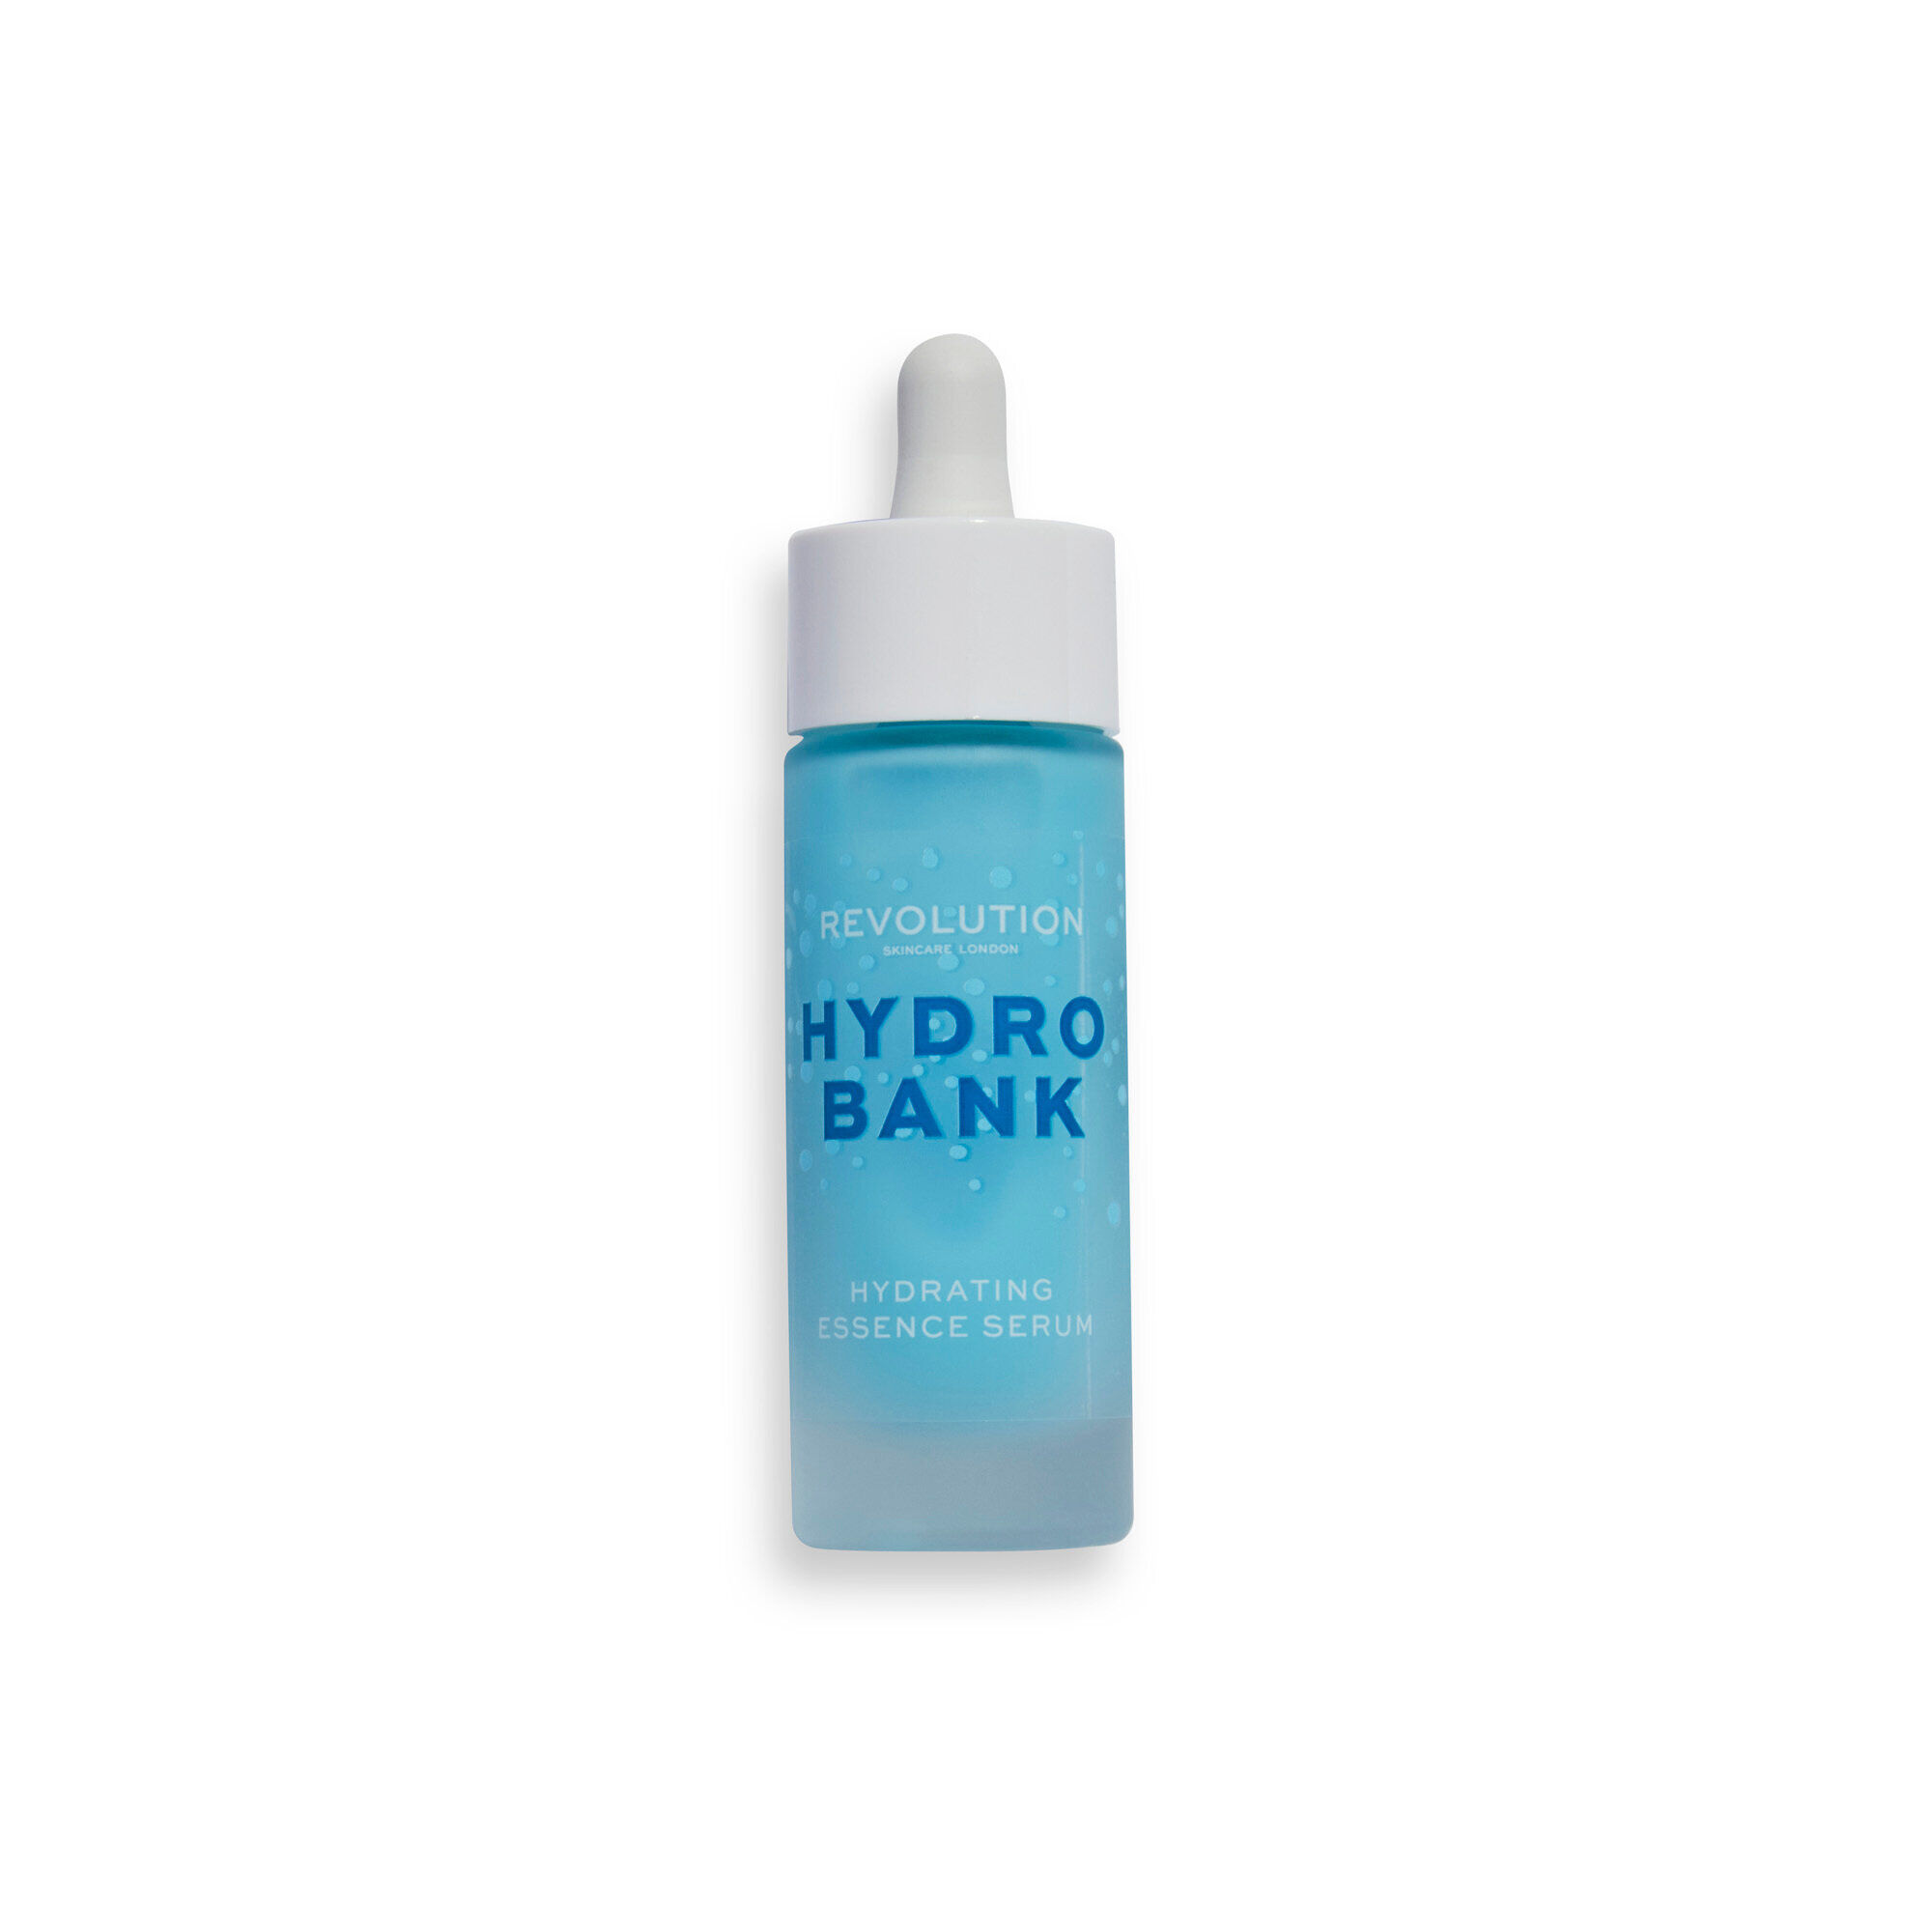 Сыворотка увлажняющая Hydro Bank Hydrating Essence Serum, 30 мл